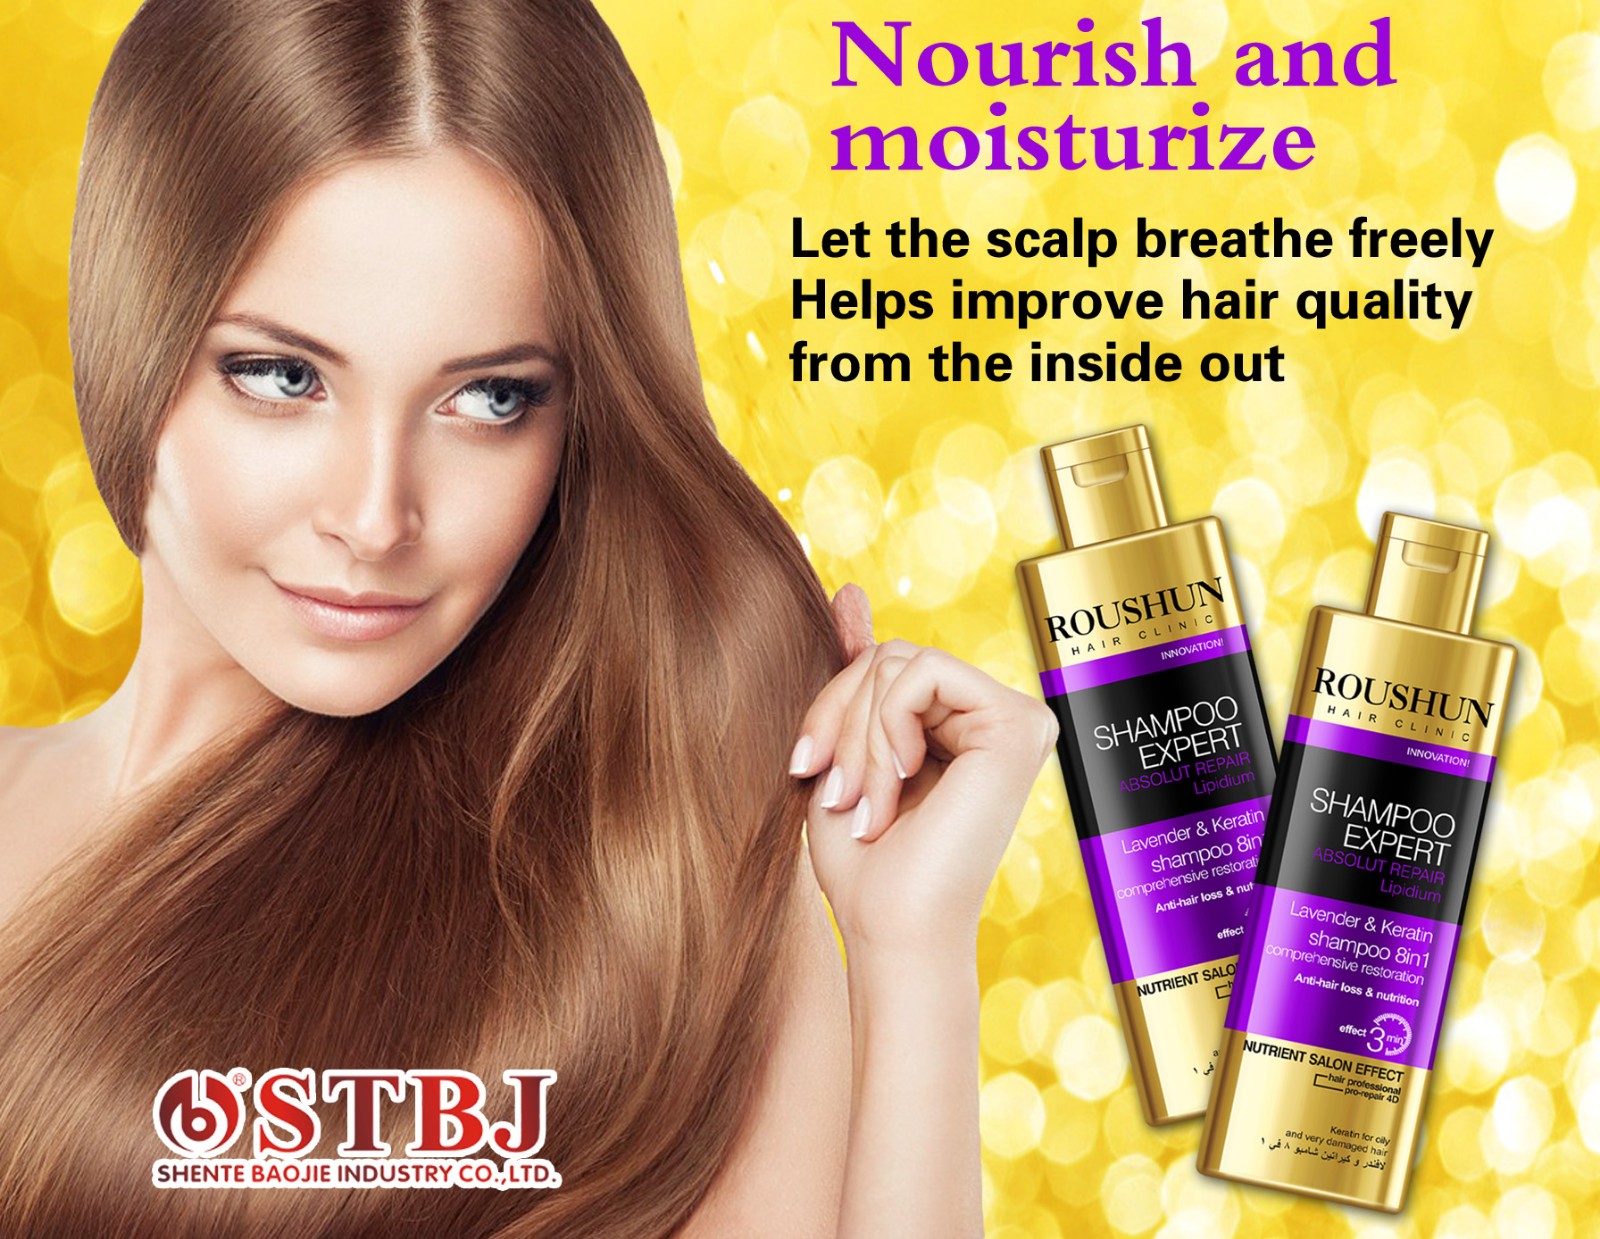 Lavender&Keratin shampoo